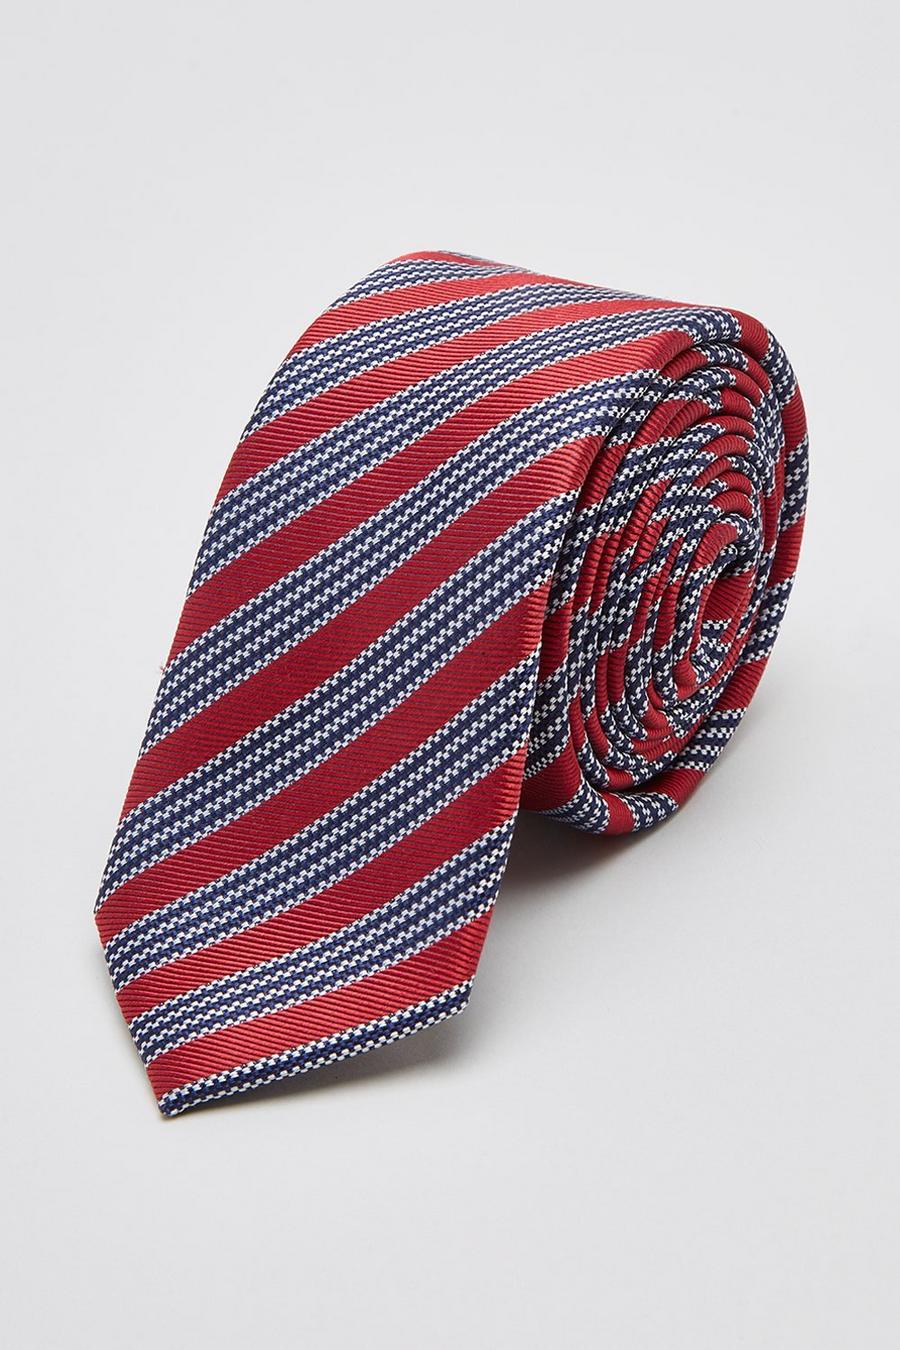 Ben Sherman Red House Stripe Tie